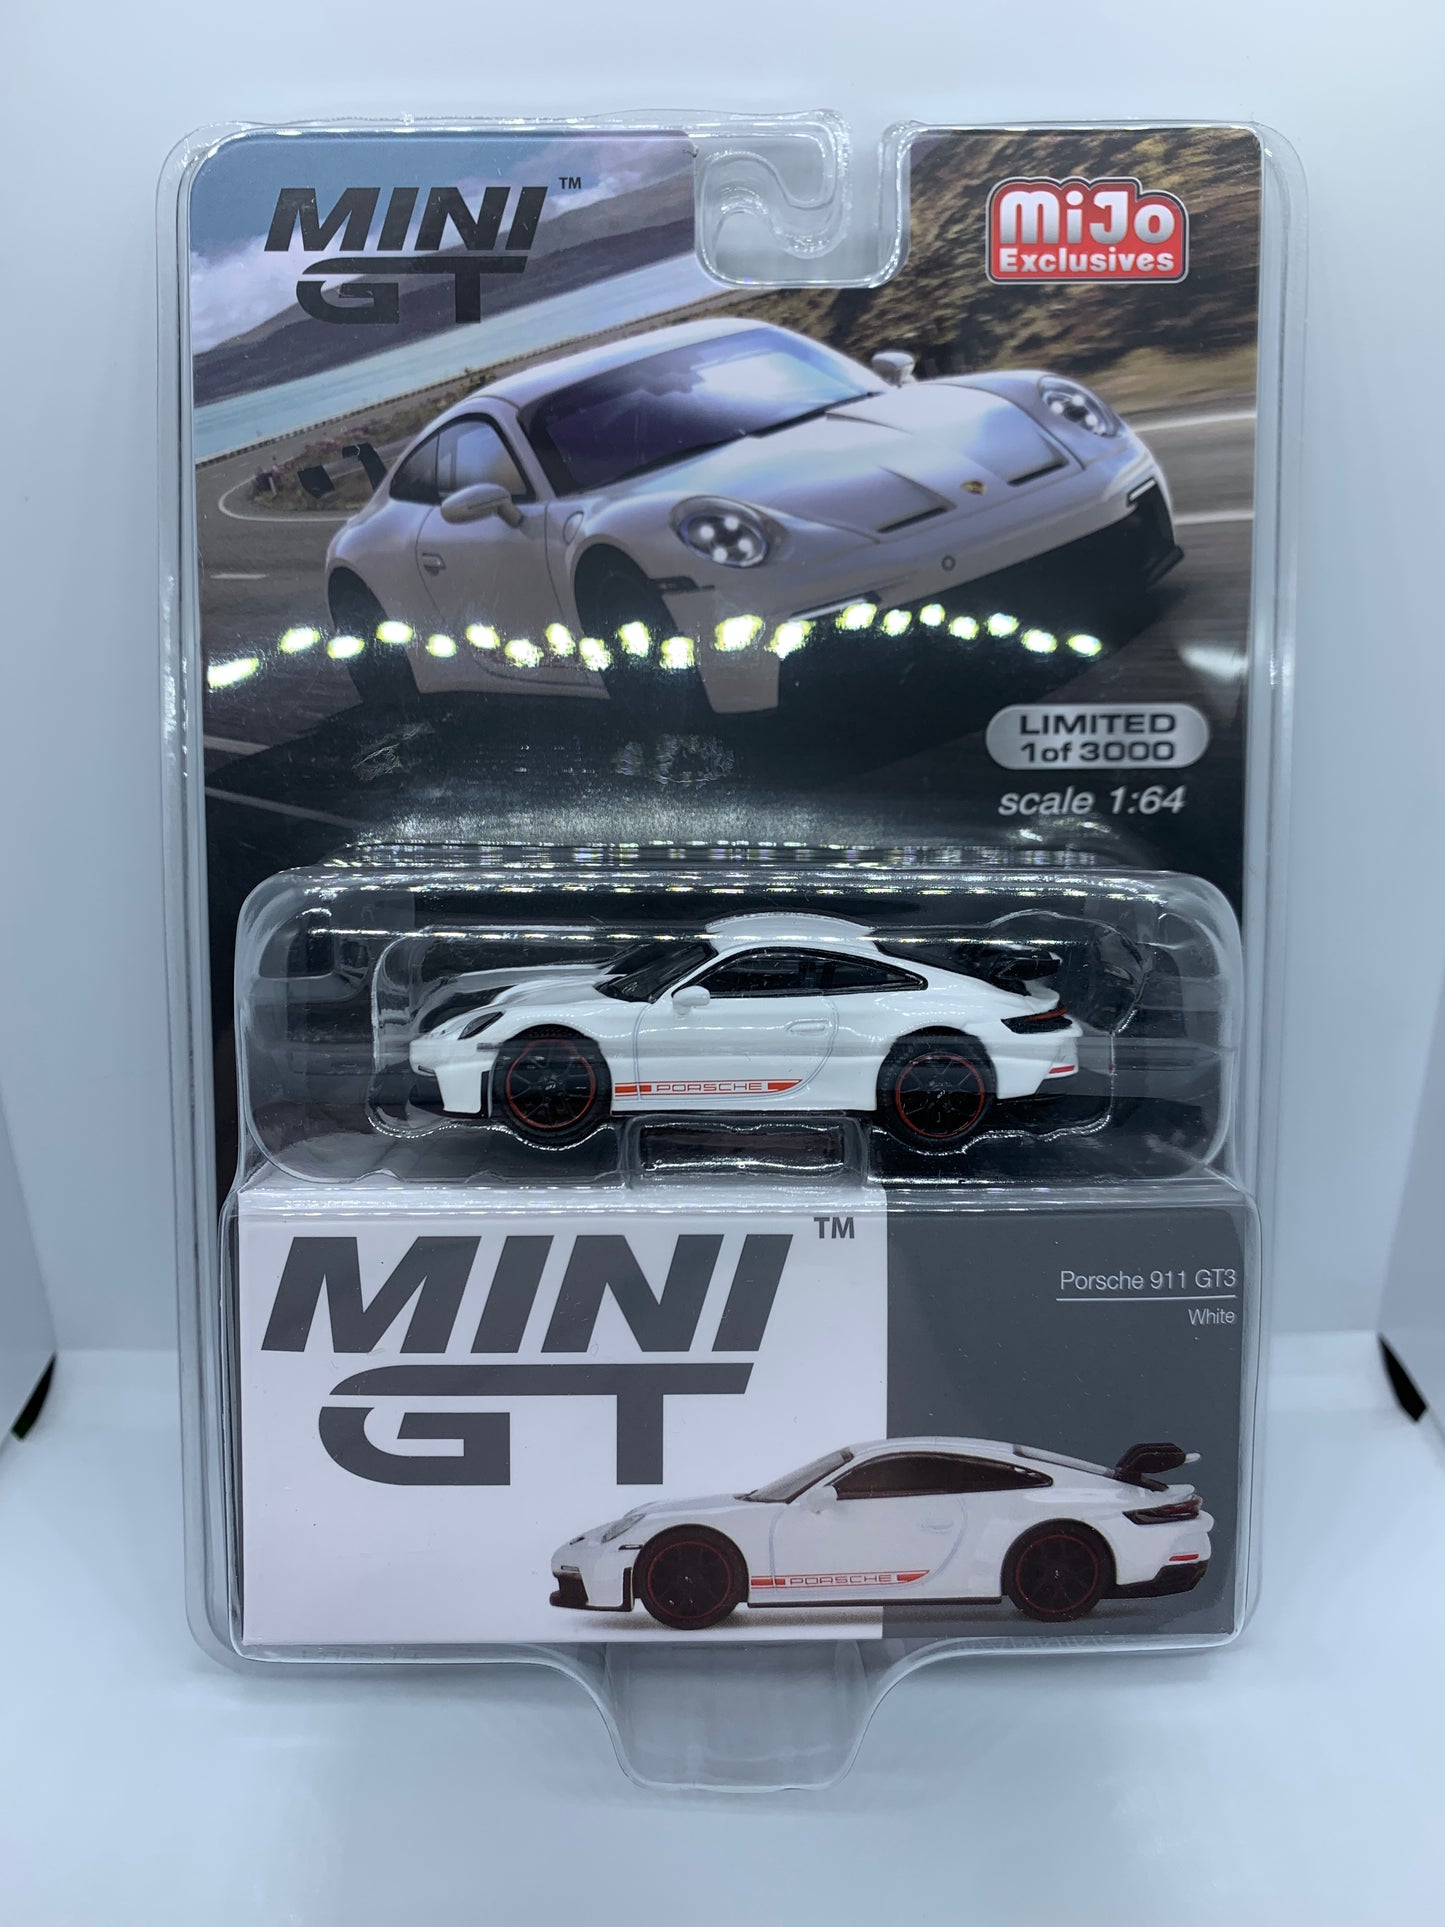 MINI GT - Porsche 911 GT3 Racing White - Display Blister Packaging